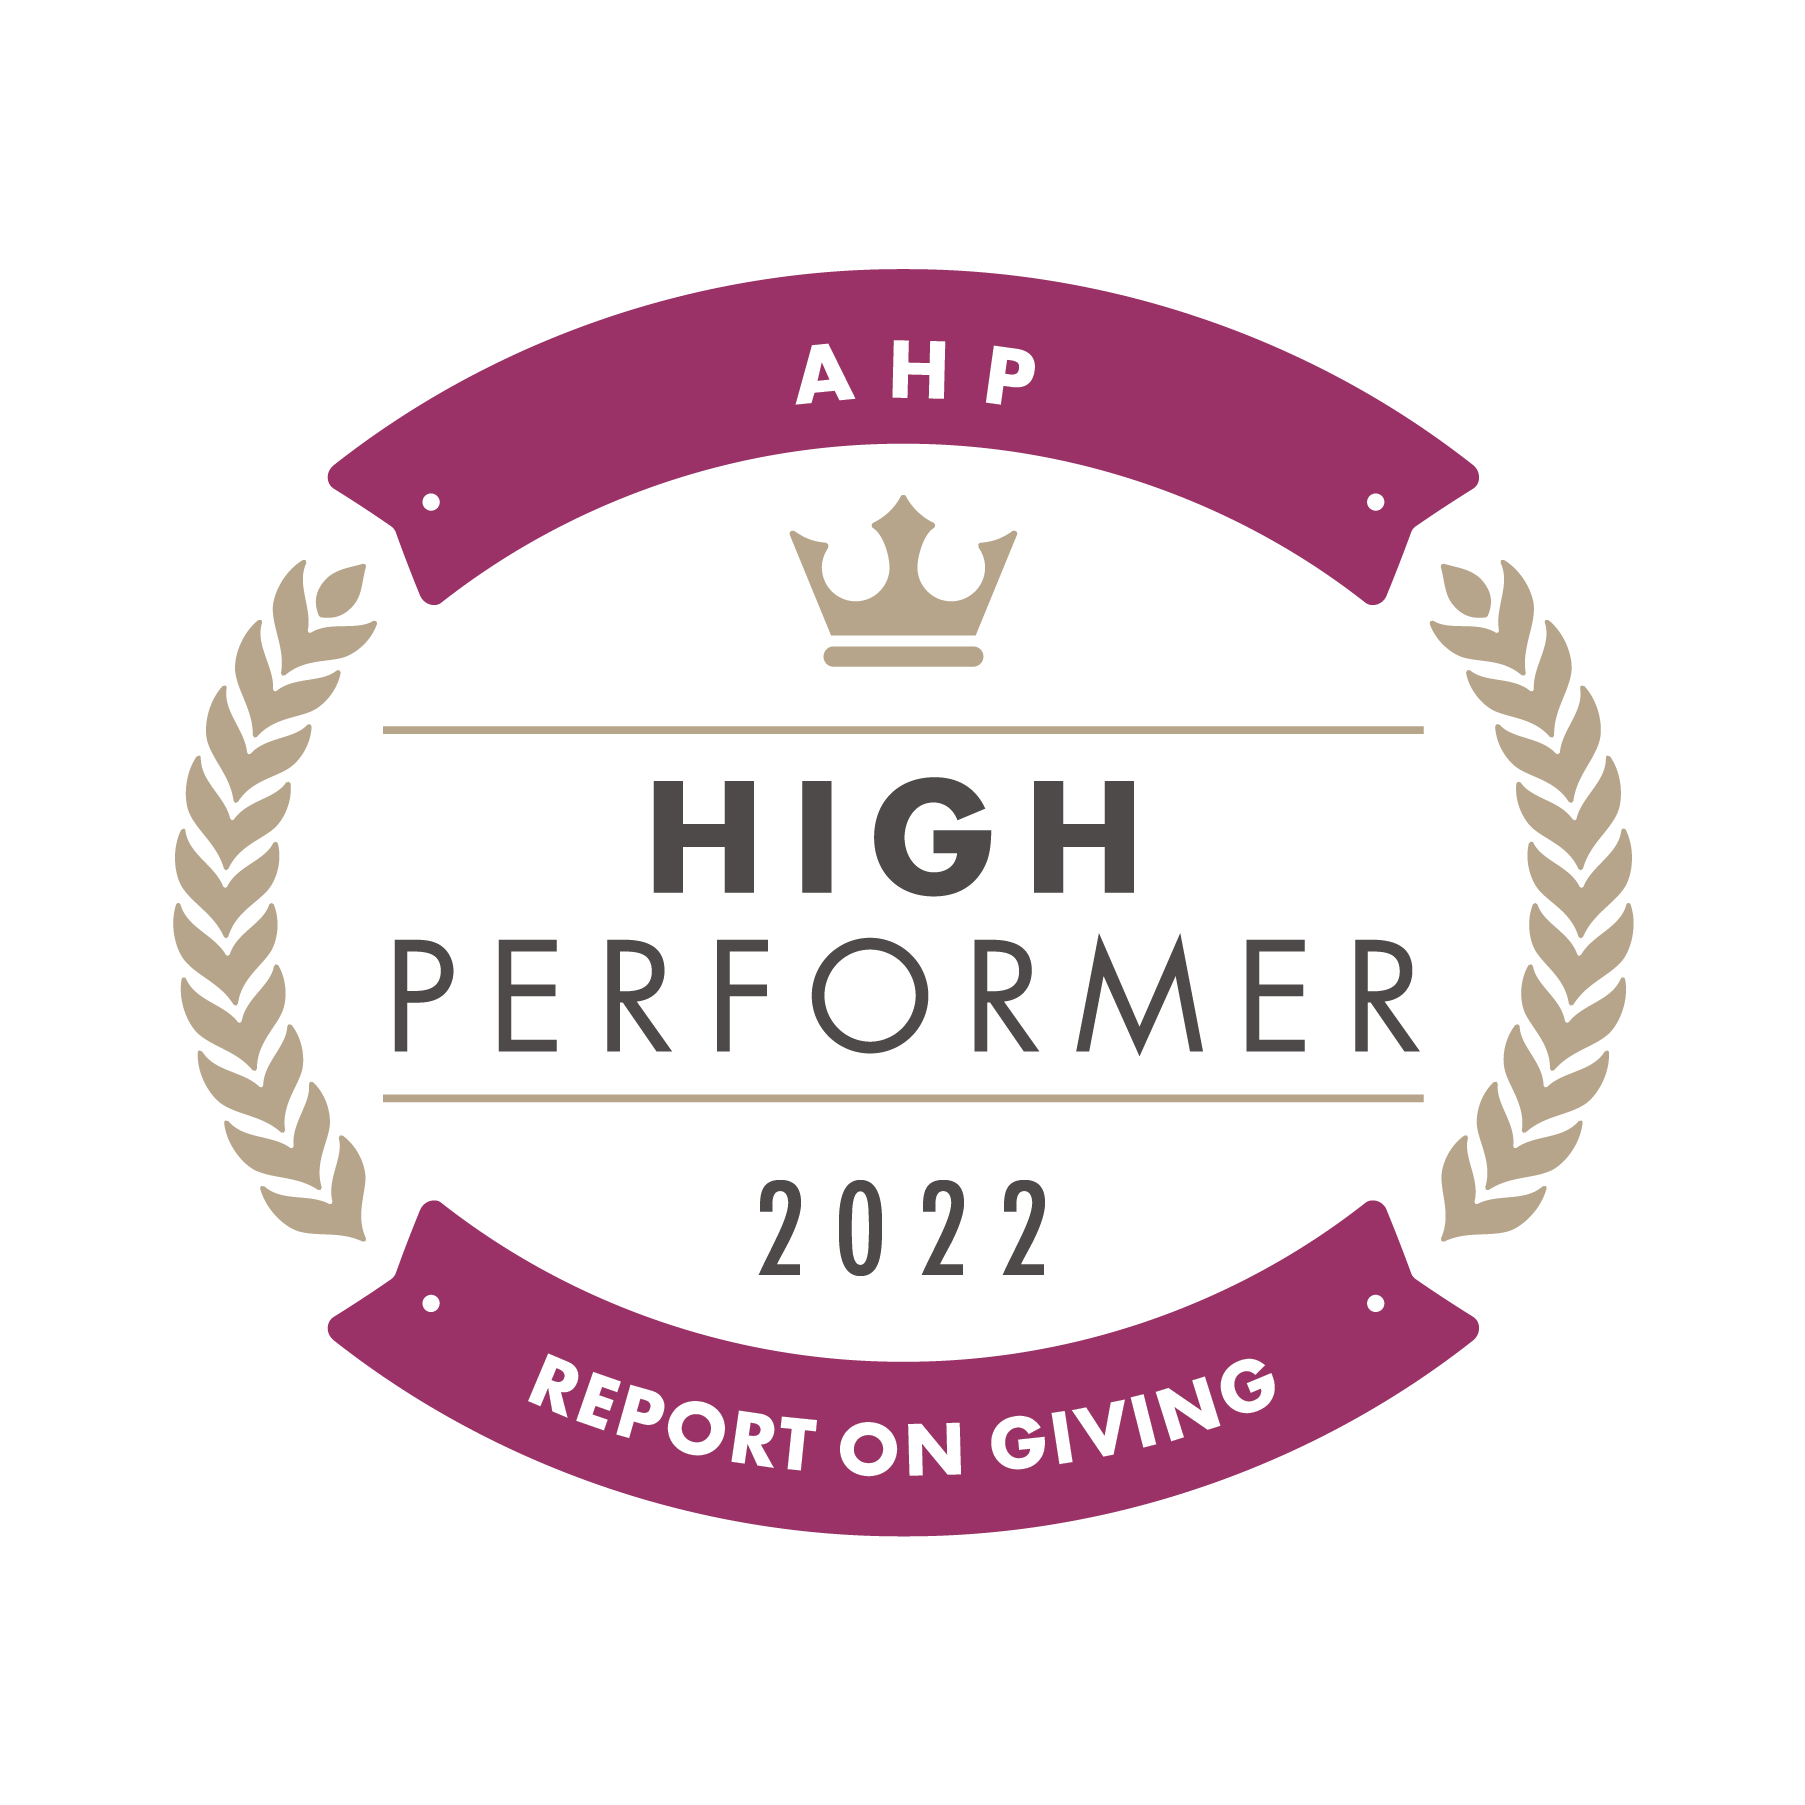 AHP High Performer